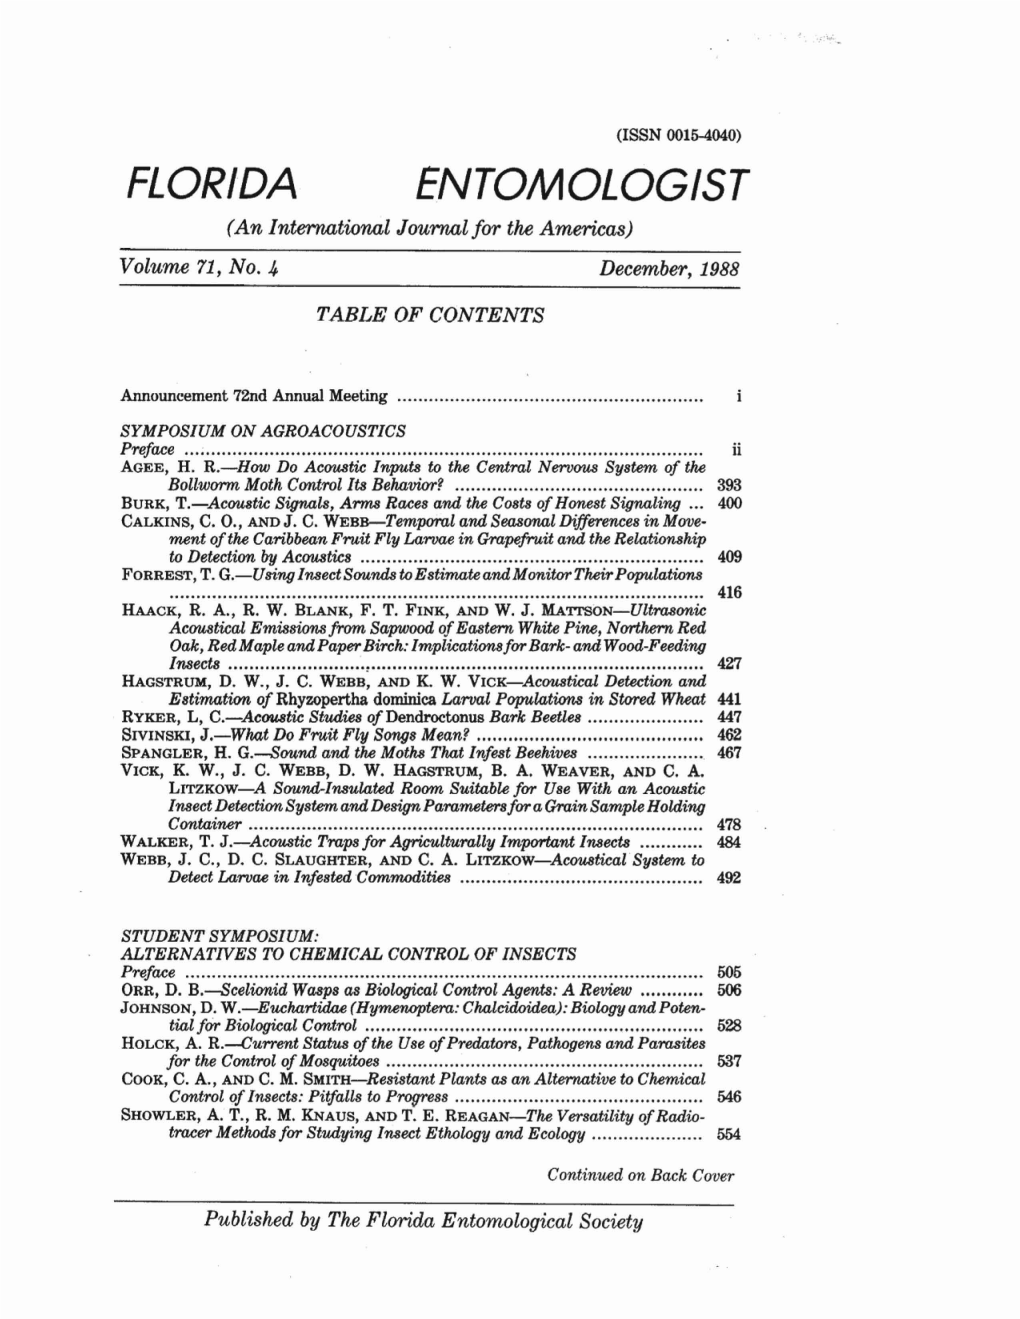 FLORIDA ENTOMOLOGIST (An International Journal/Or the Americas) Volume 71, No.4 December, 1988